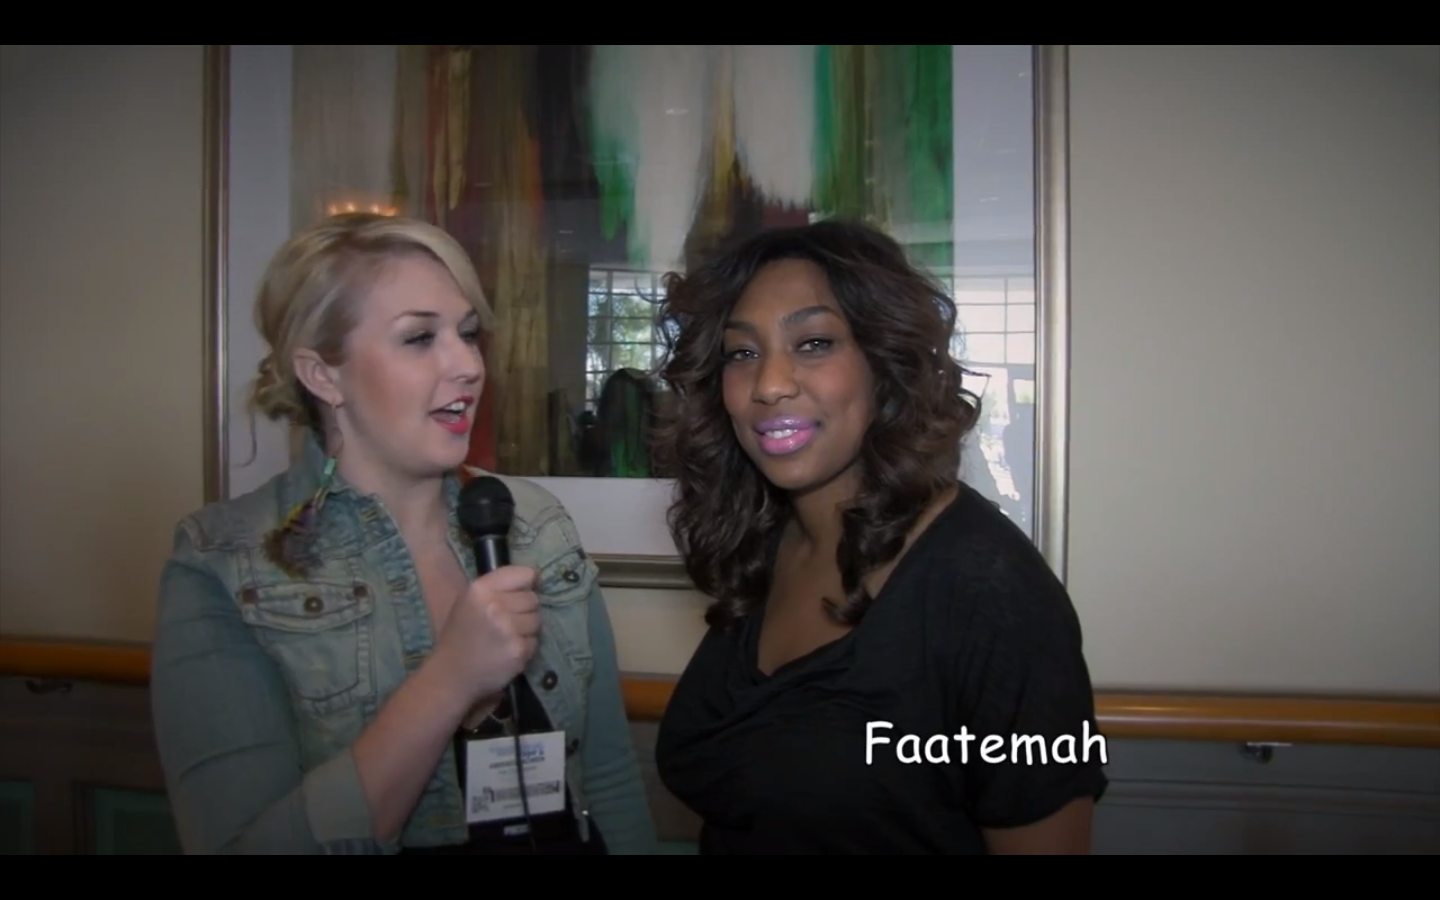 Hair Nerds Interviews Faatemah